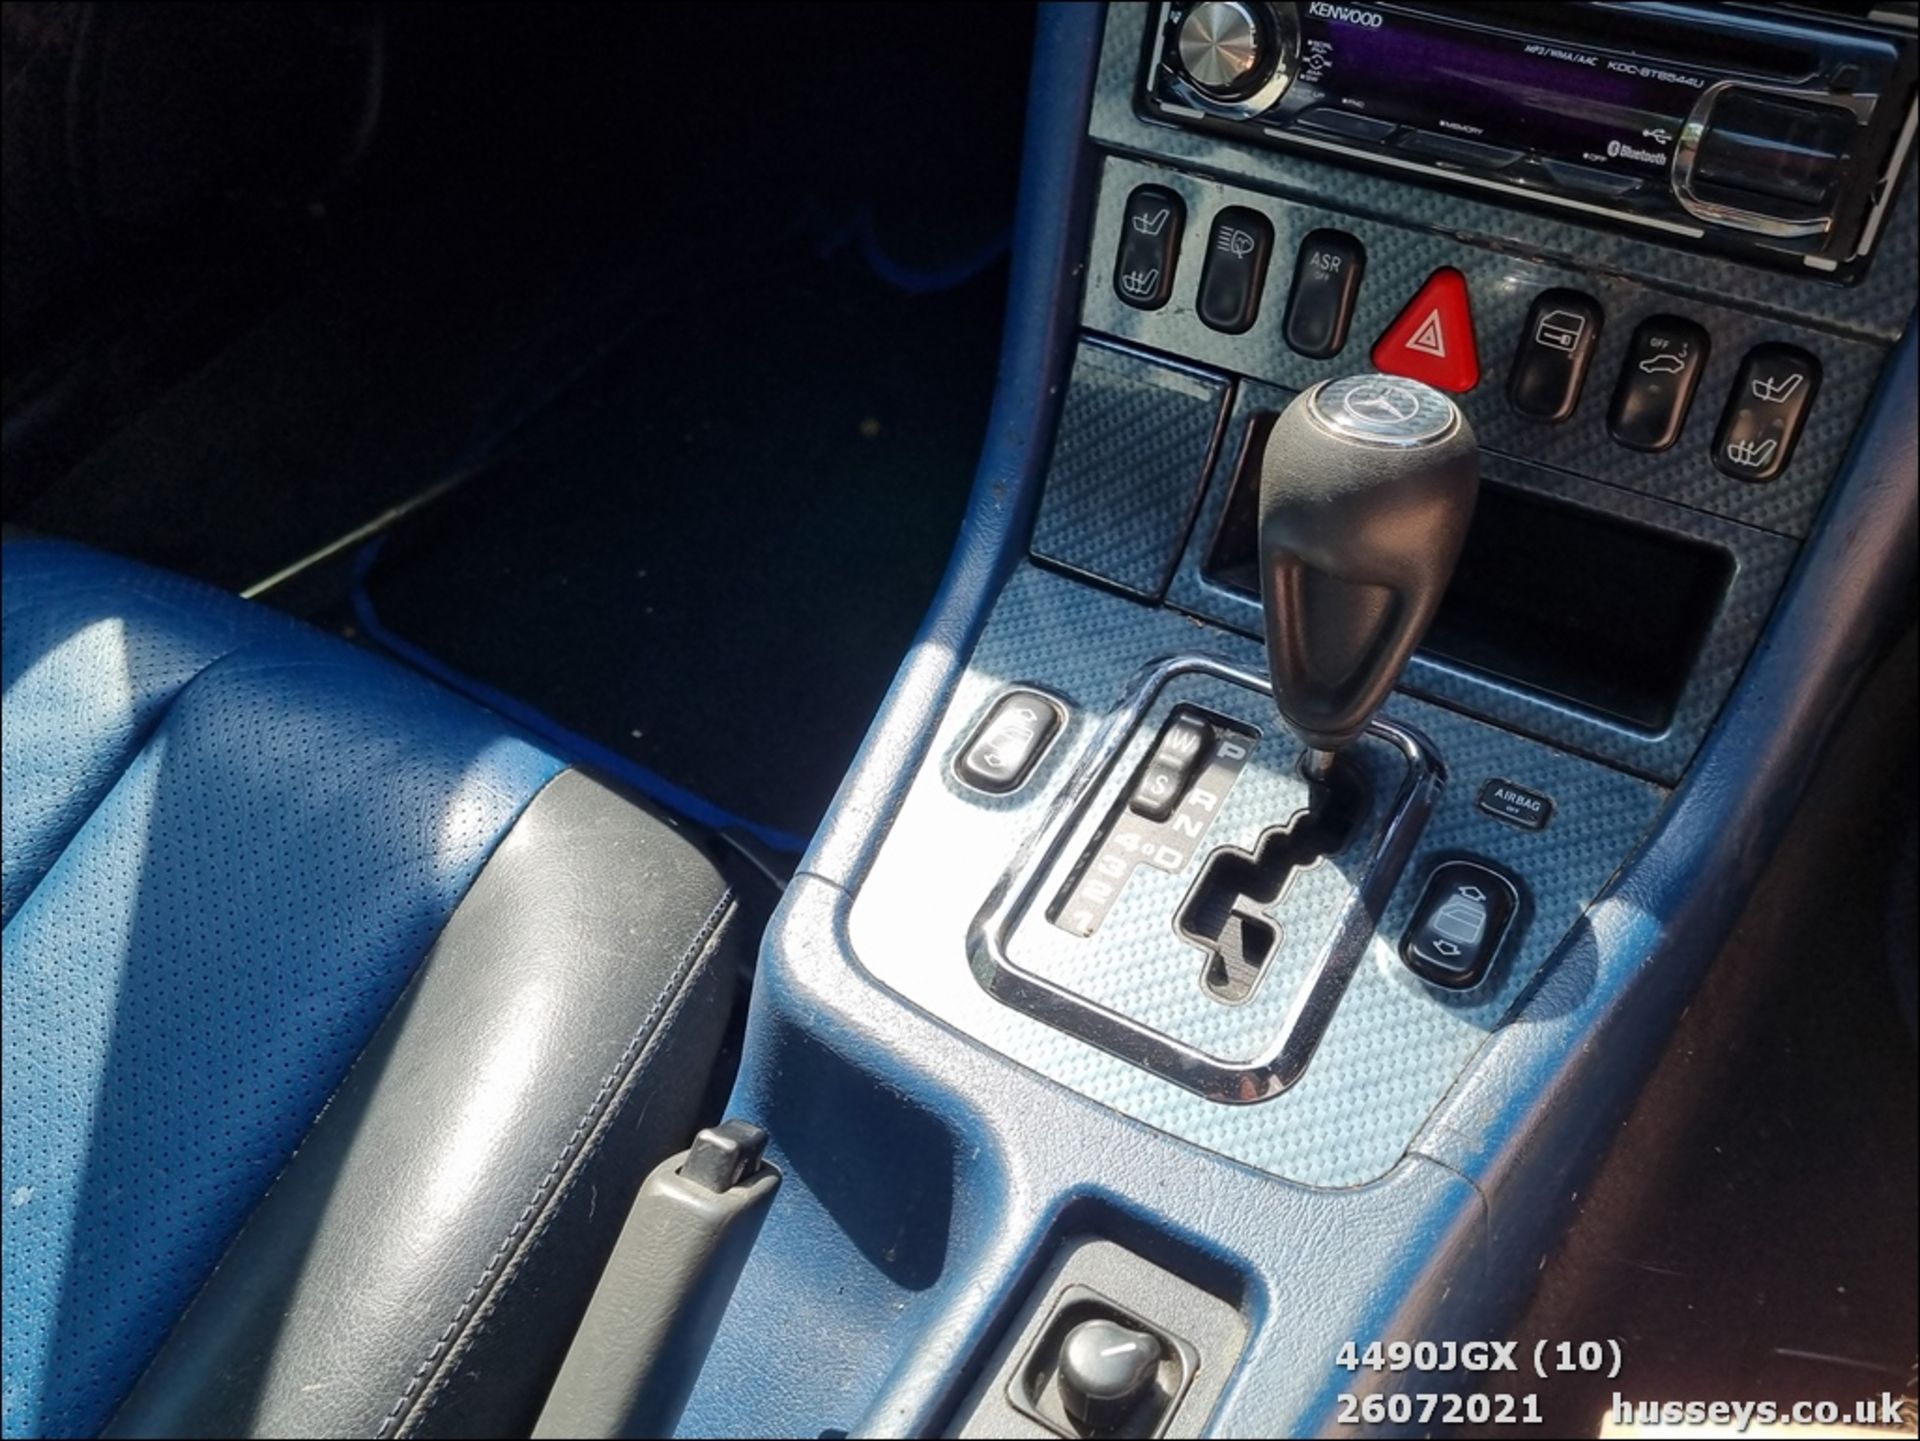 2000 MERCEDES SLK 230 KOMPRESSOR AUTO - 2295cc 2dr Coupe (Blue, 90k) - Image 10 of 12